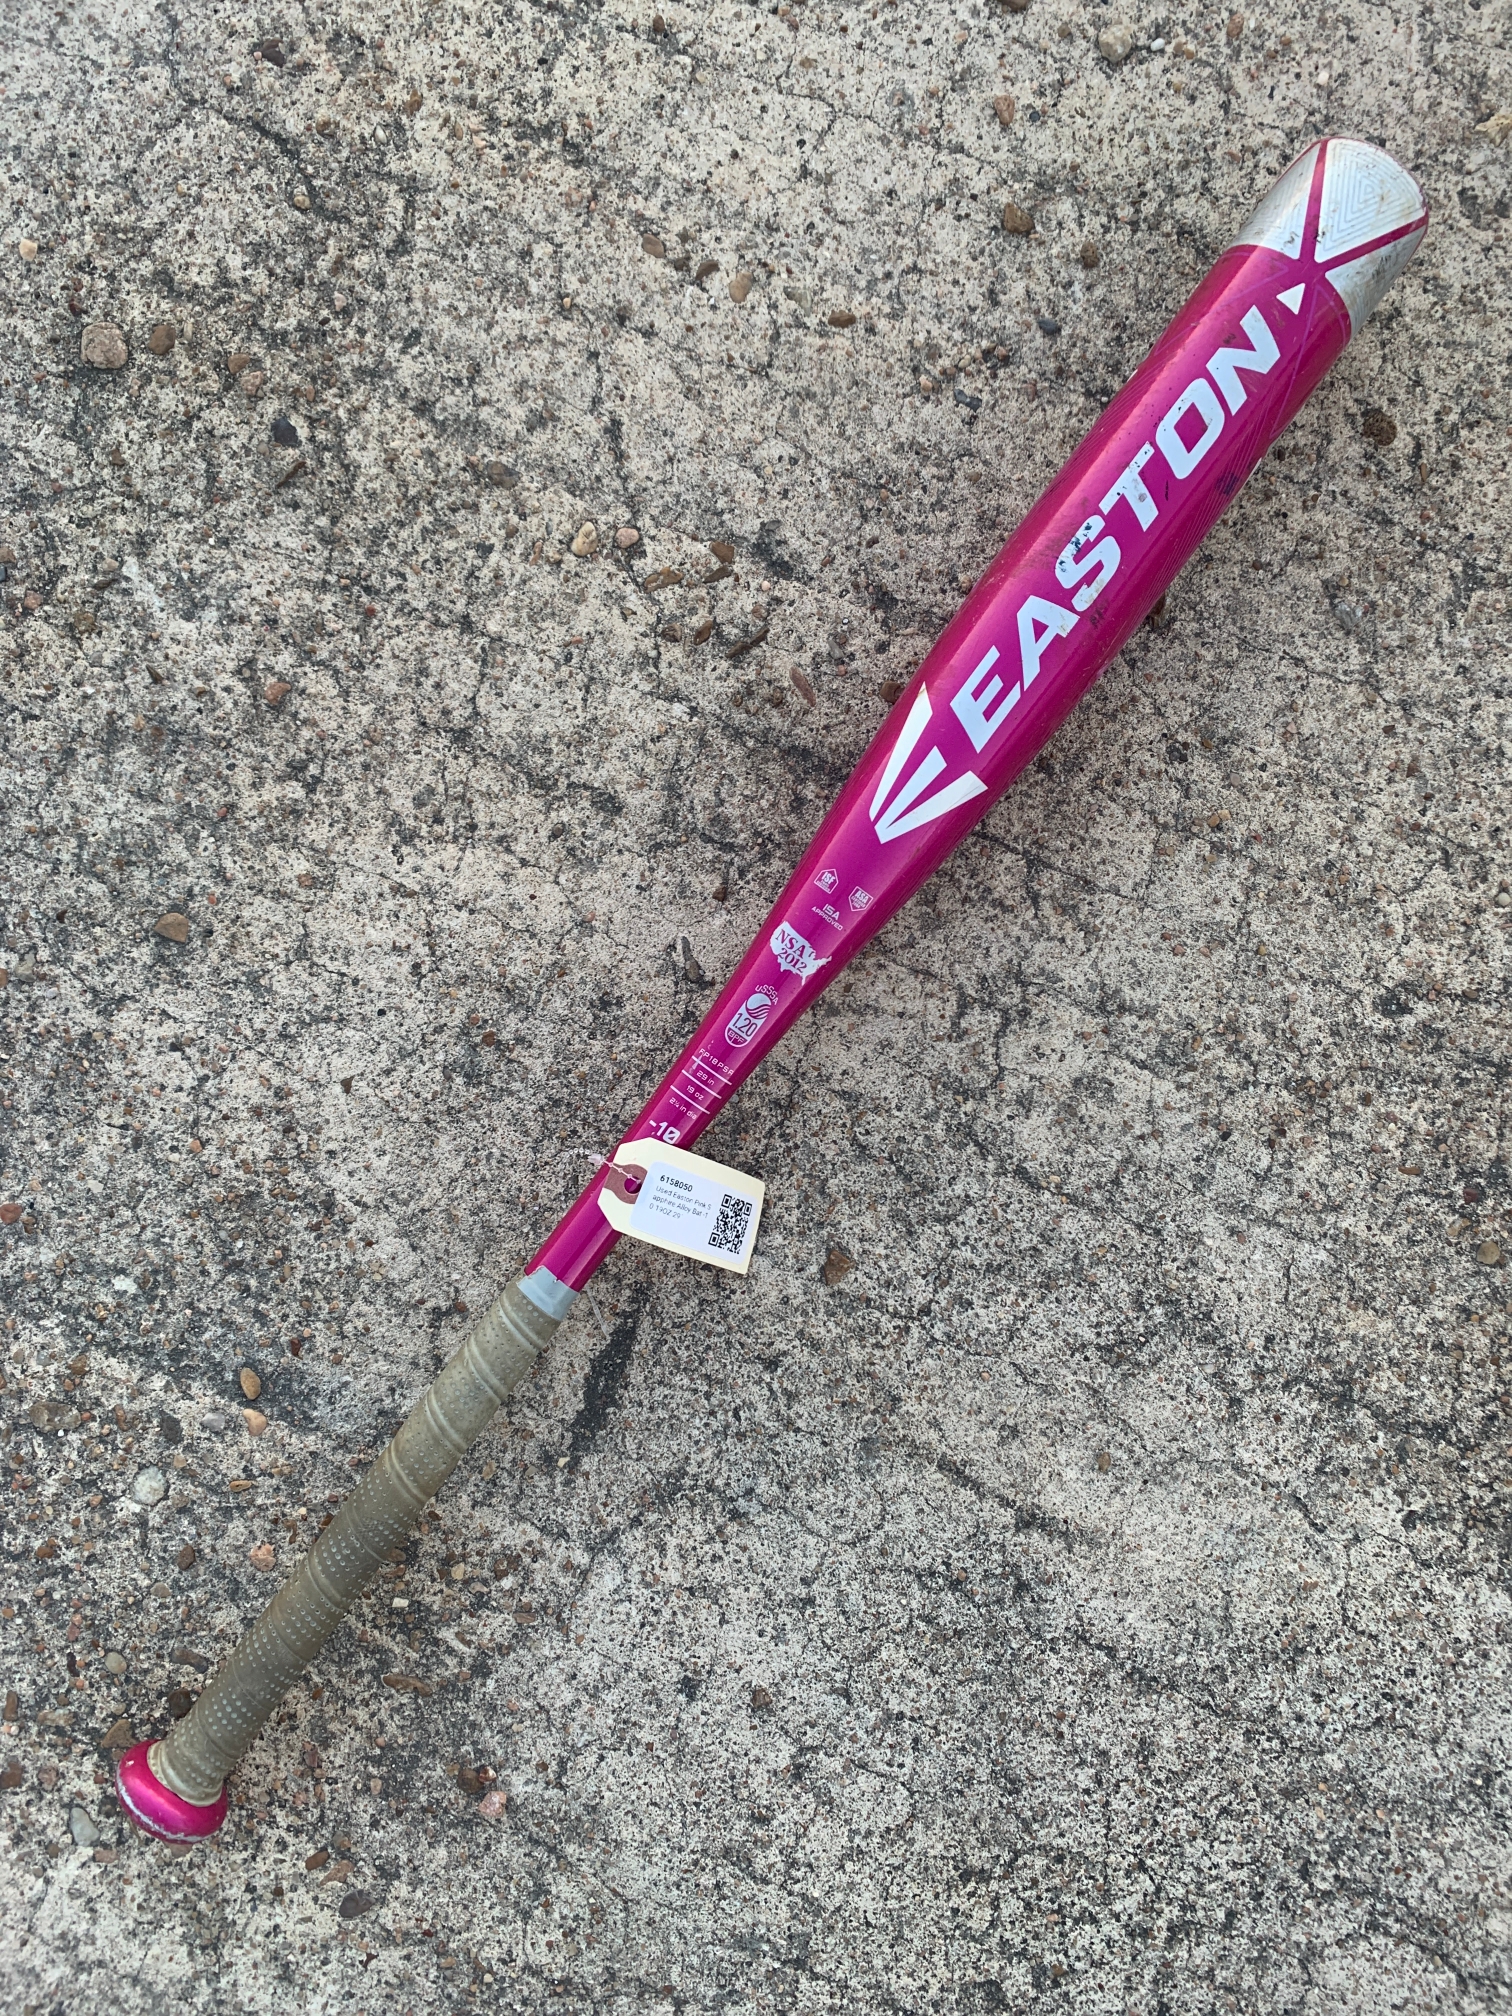 Used 2018 Easton Pink Sapphire Alloy Bat -10 19OZ 29"